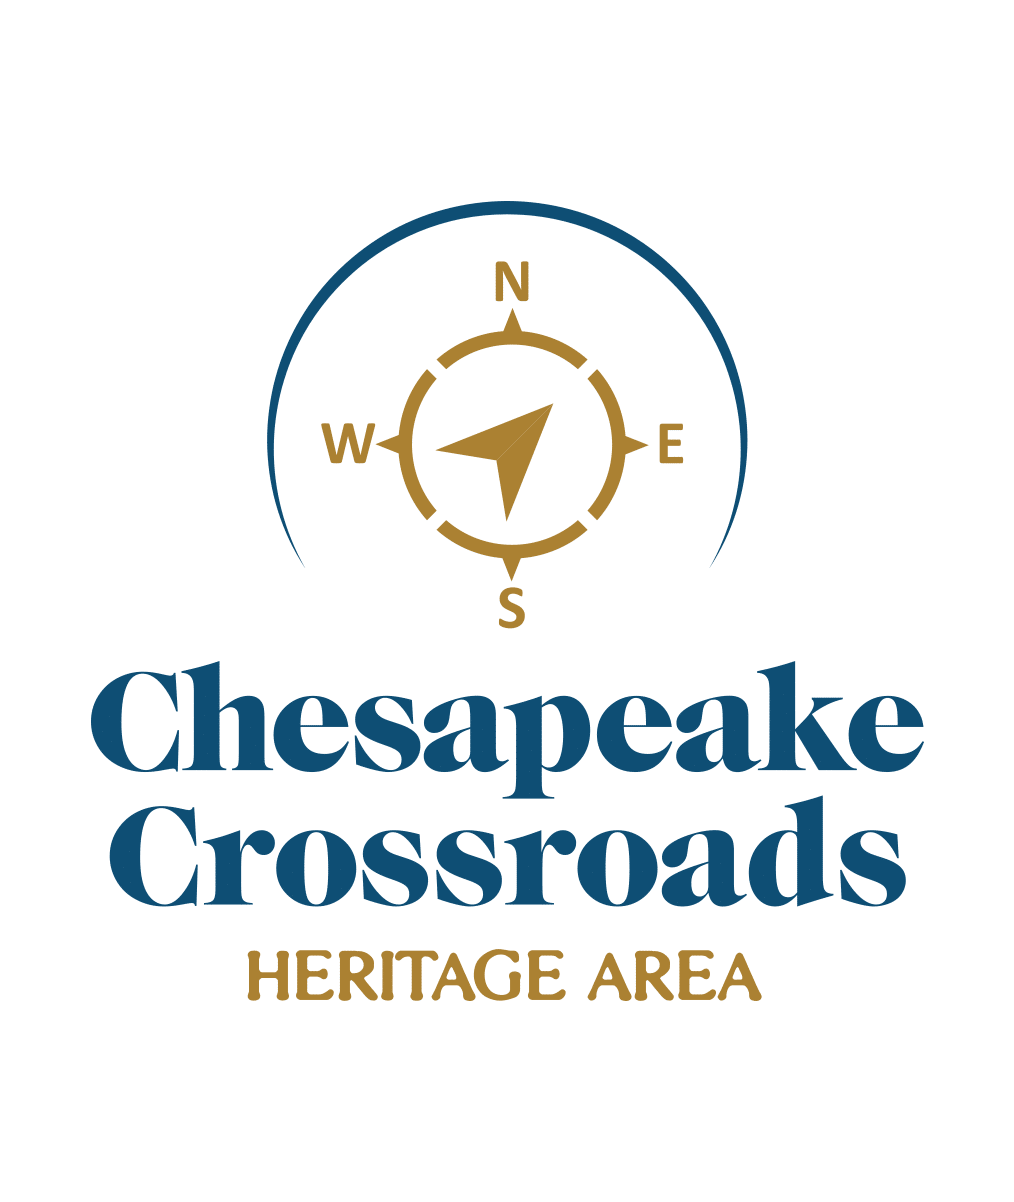 Chesapeake Crossroads Heritage Area